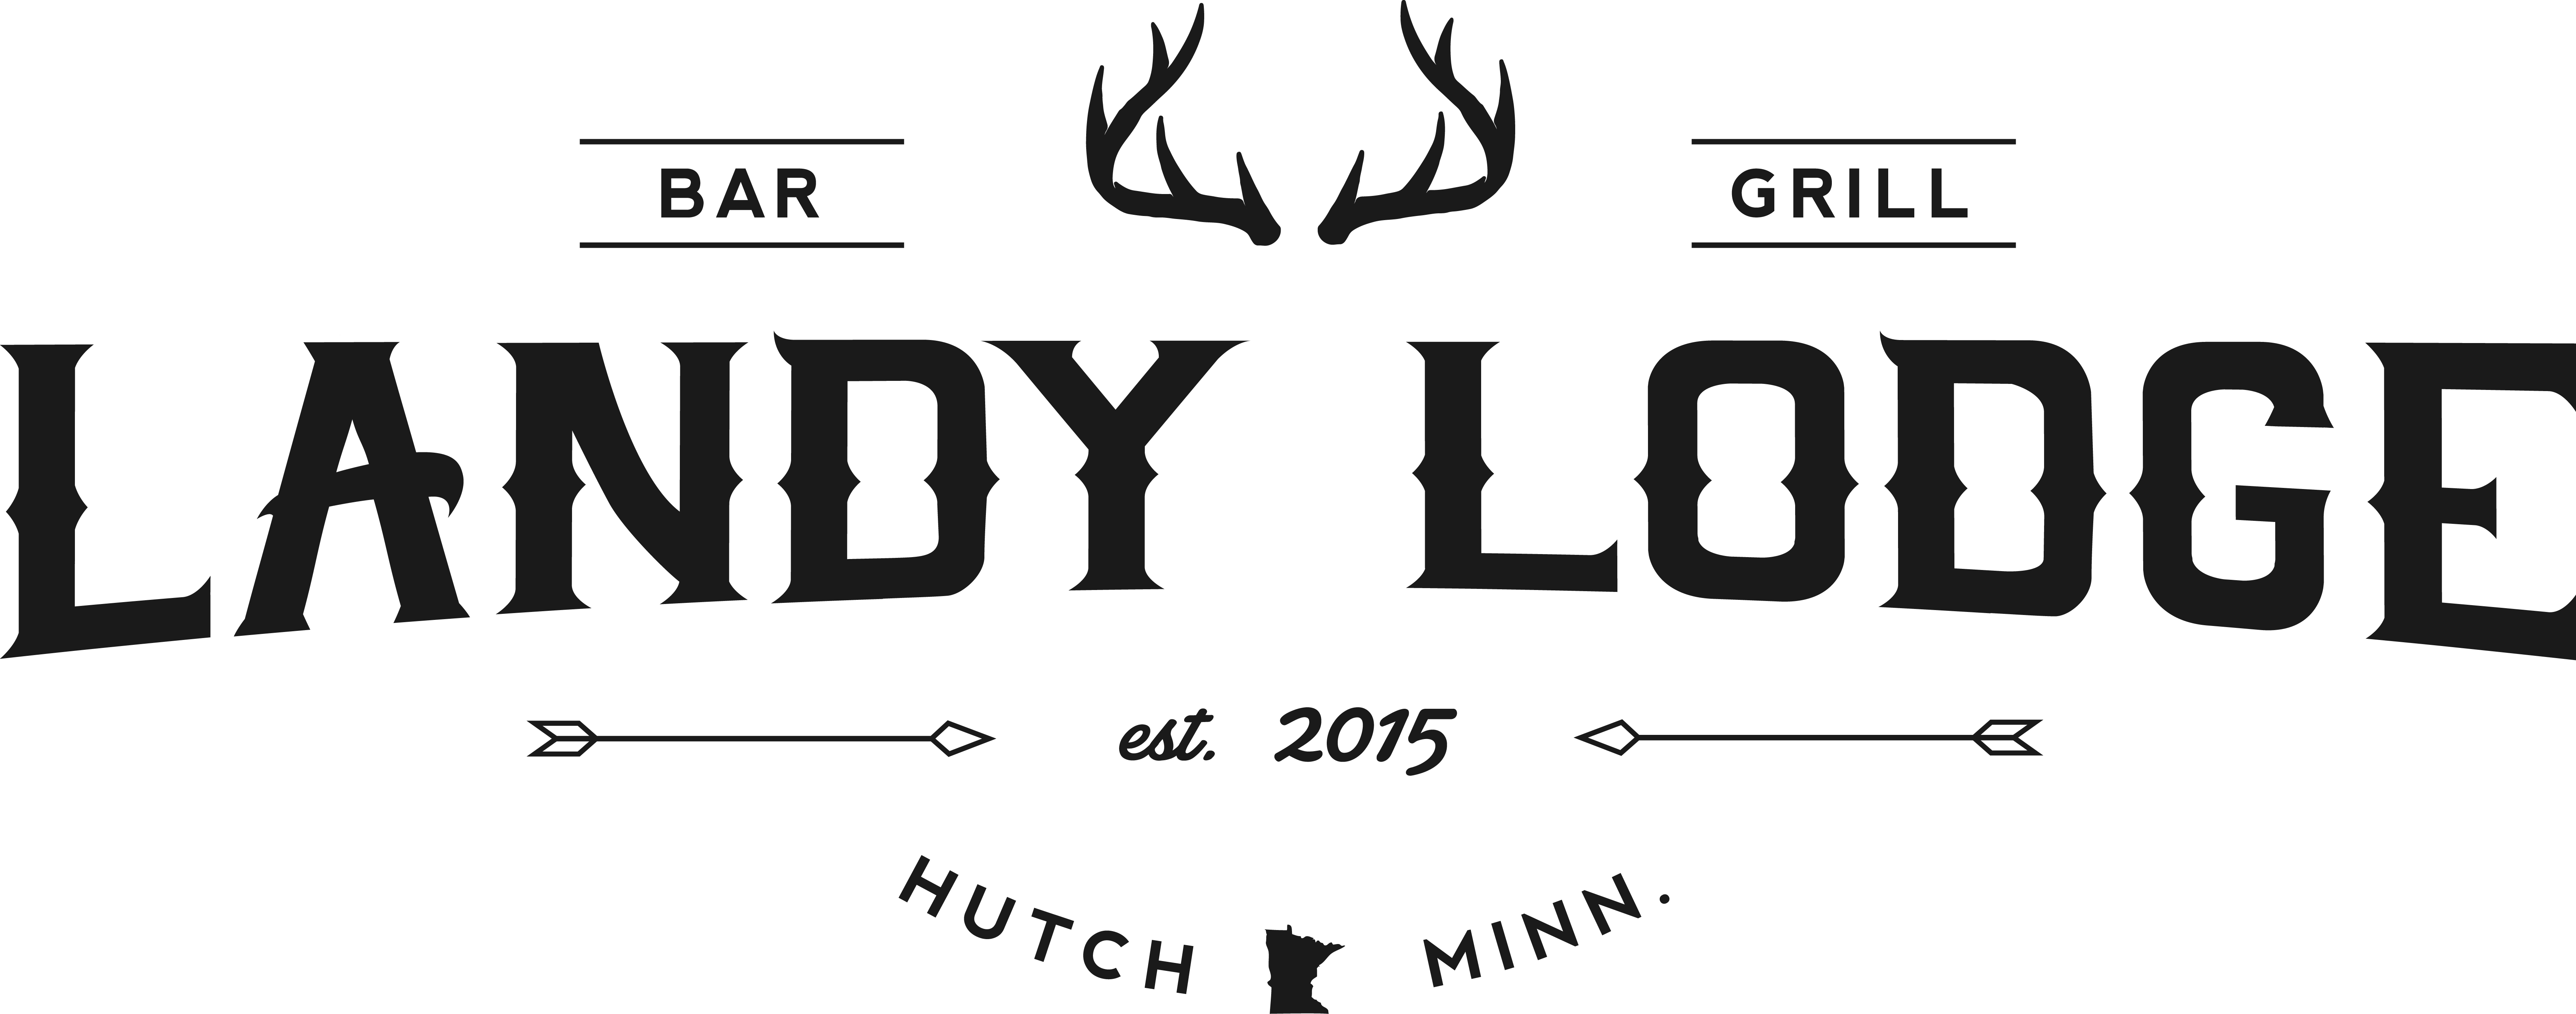 Landy Lodge Bar and Grill Logo